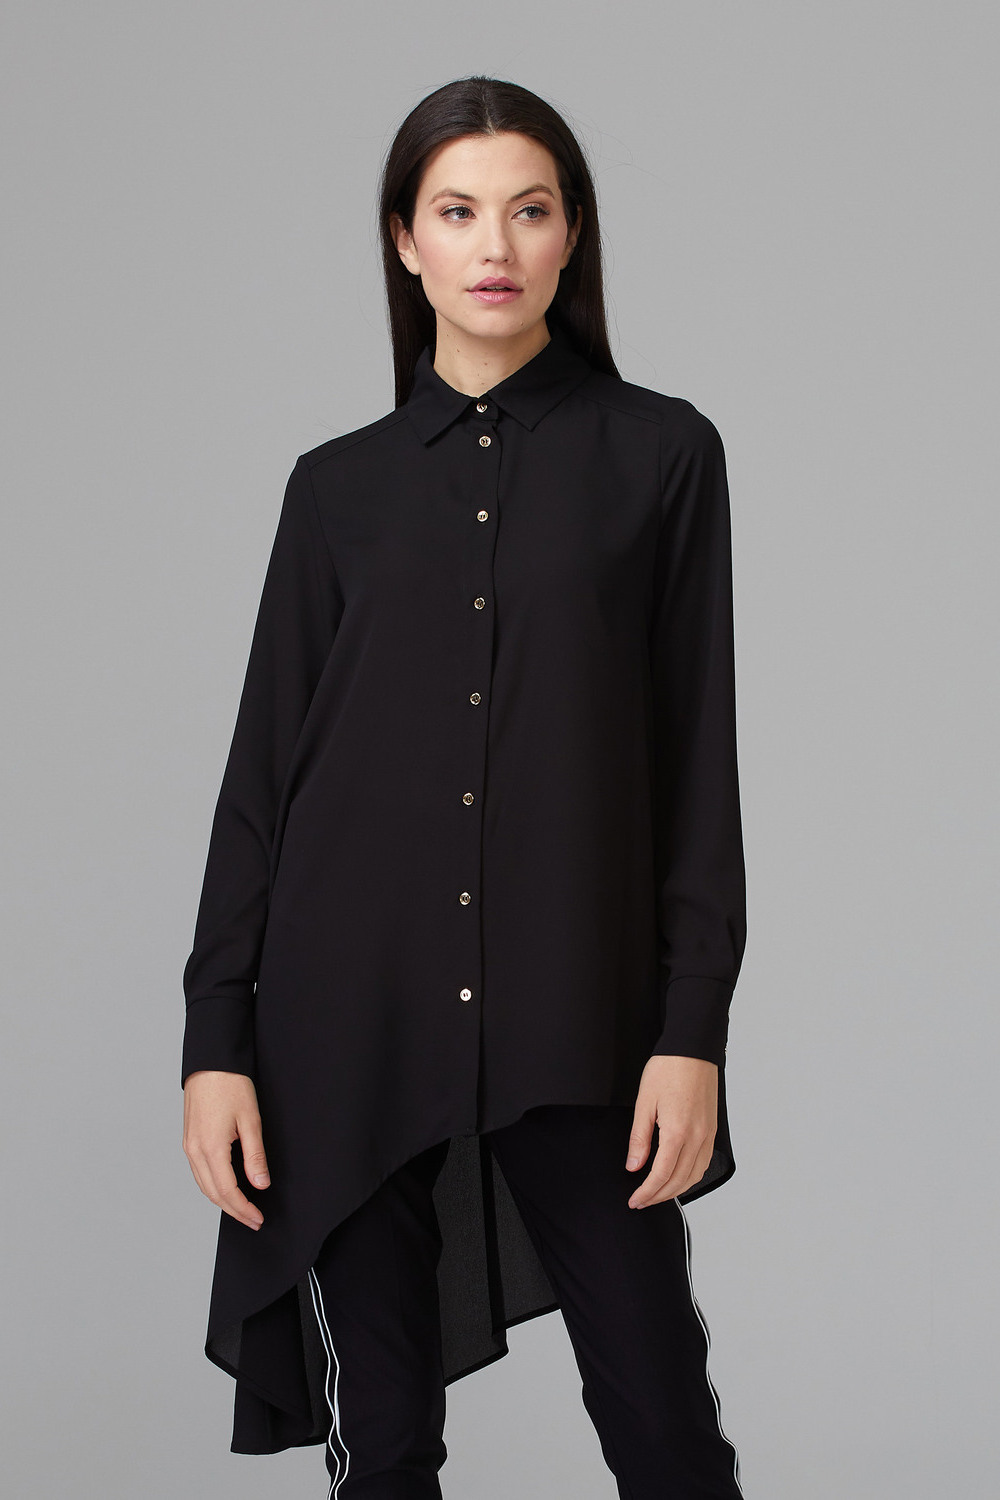 Joseph Ribkoff Shirt style 194233. Black